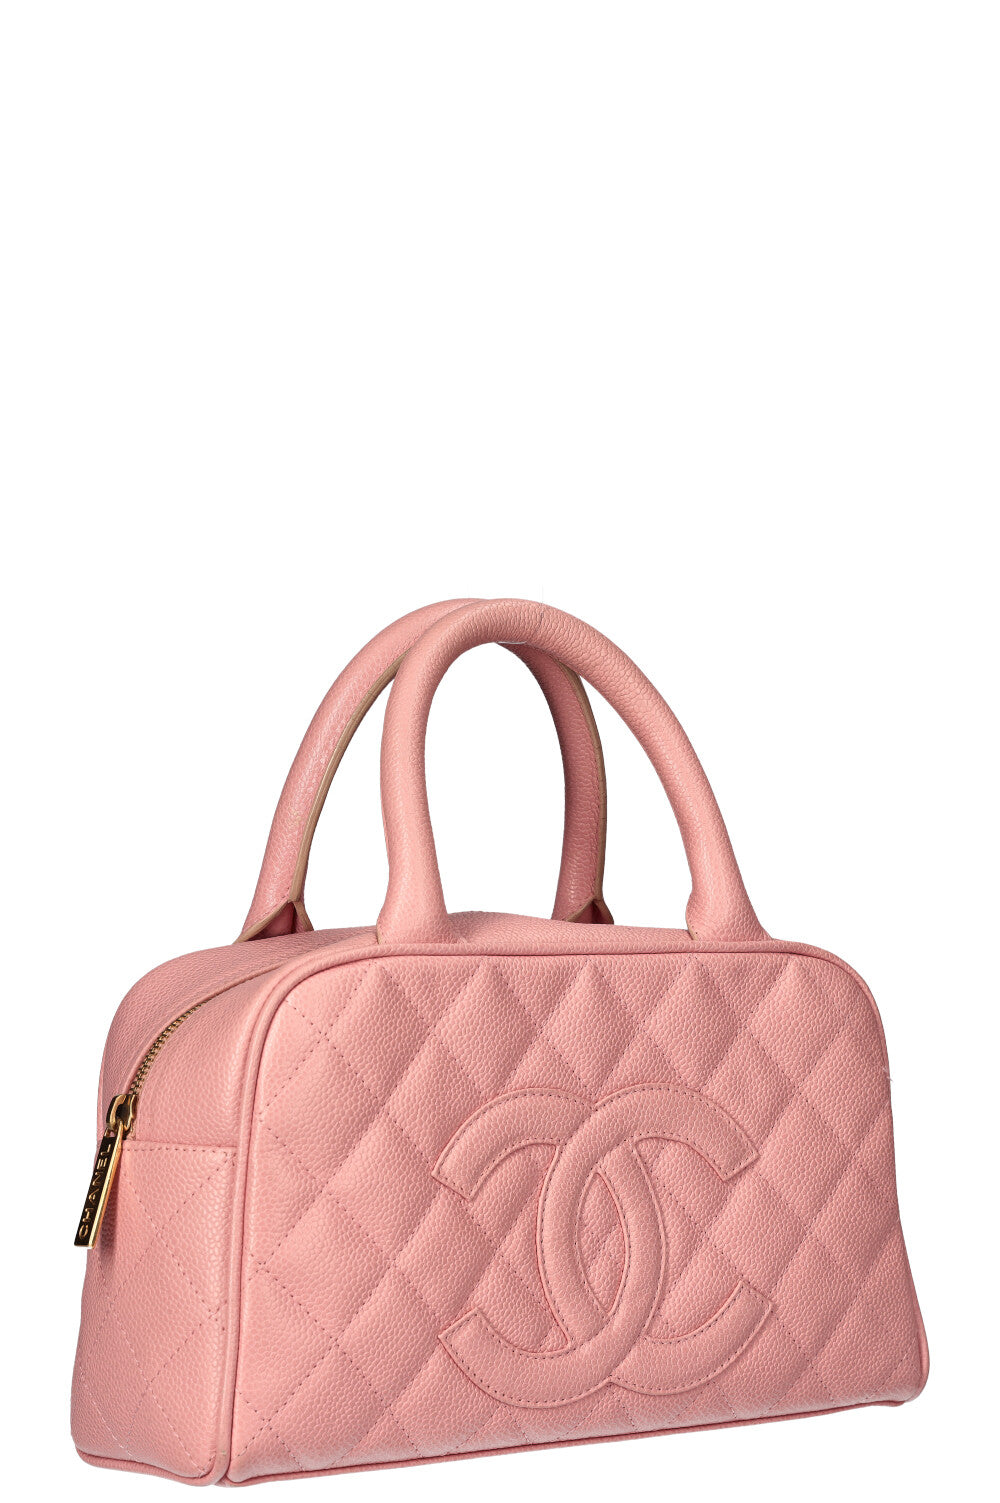 Chanel Timeless Handbag 339874